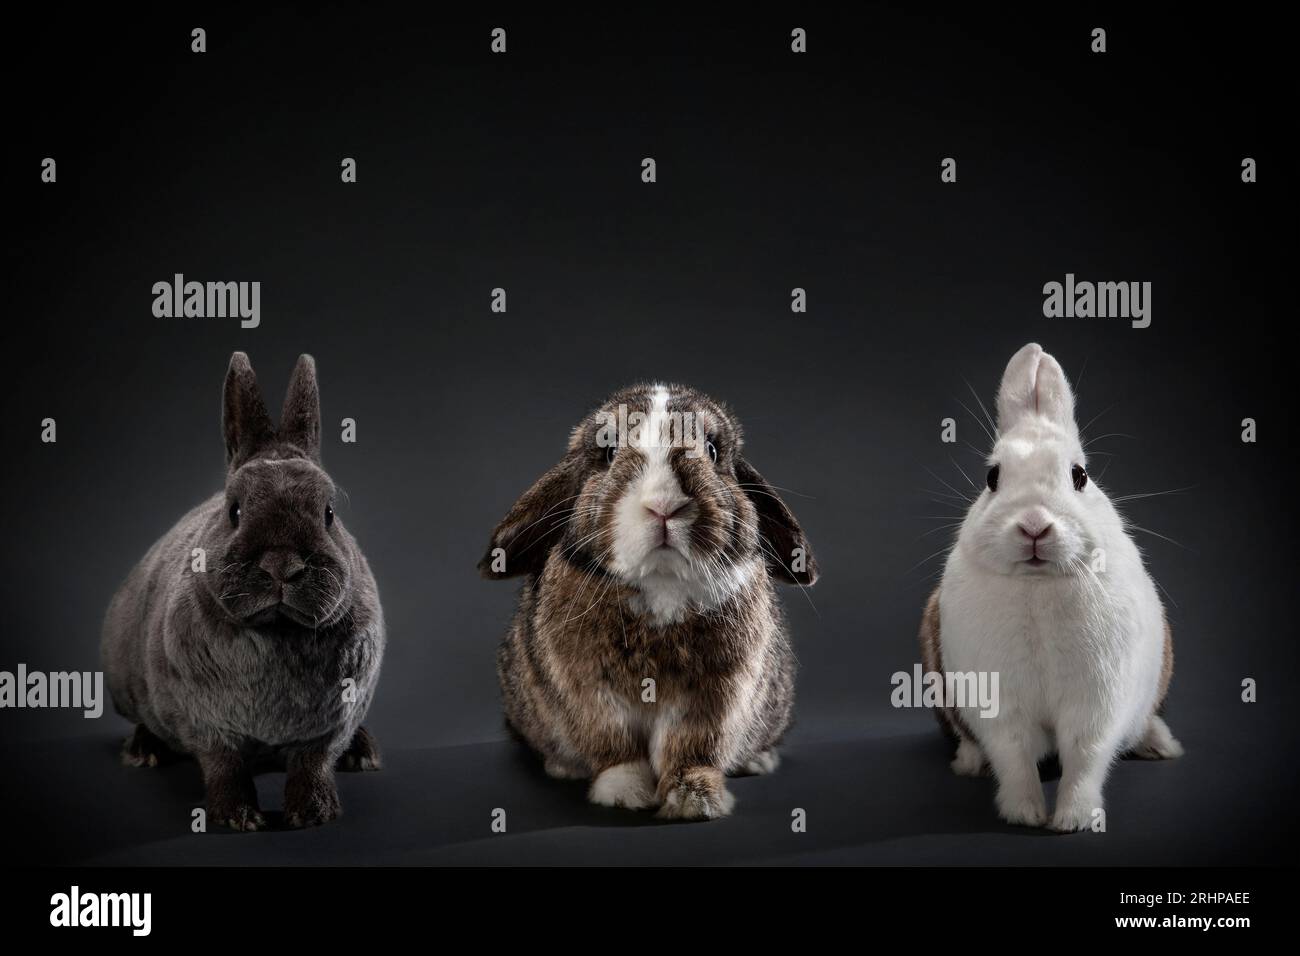 Group shot rabbit Stock Photo